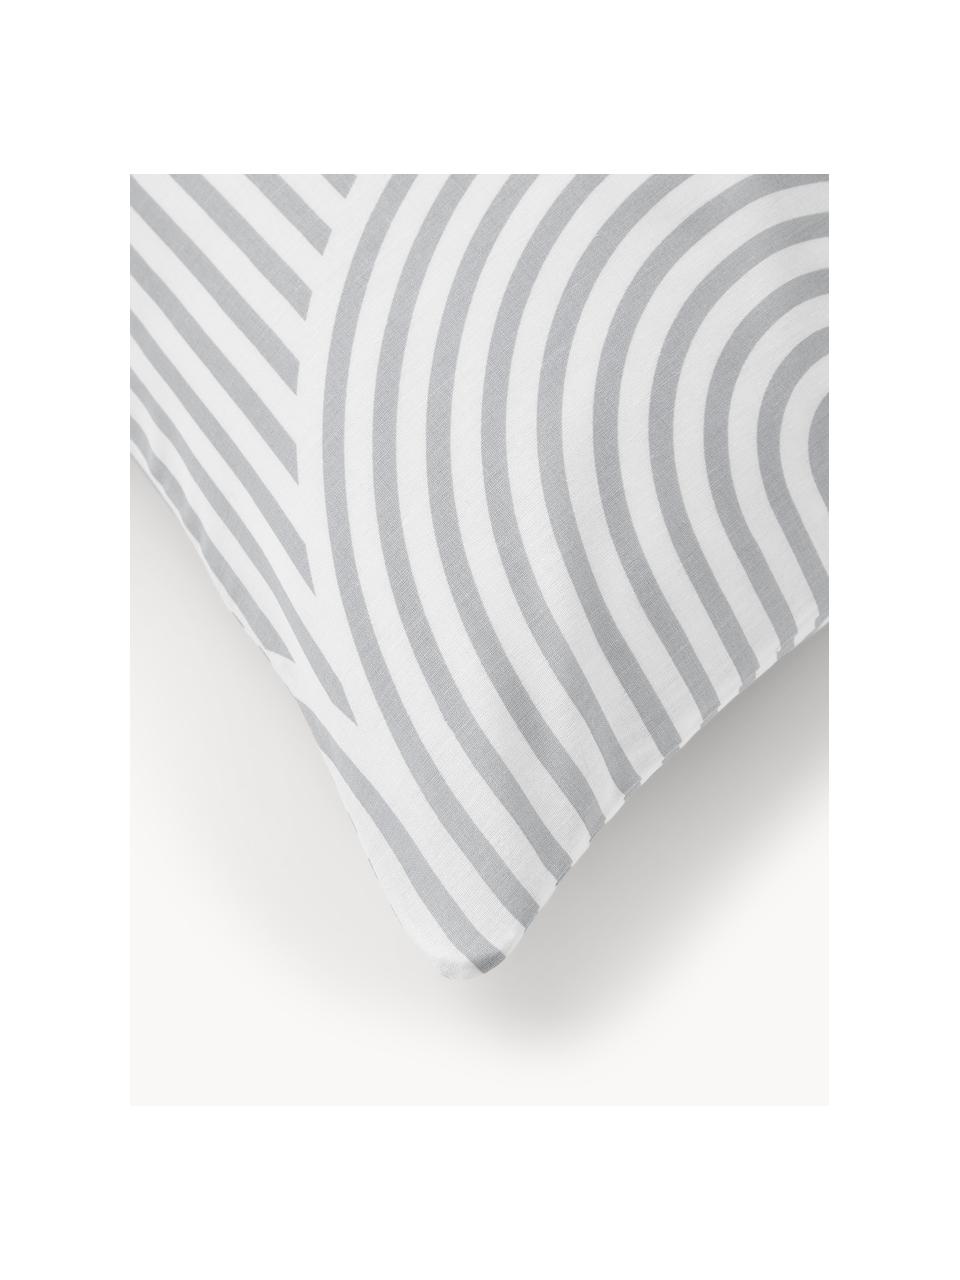 Baumwoll-Kopfkissenbezug Arcs, Webart: Renforcé Fadendichte 144 , Grau, Weiß, B 40 x L 80 cm